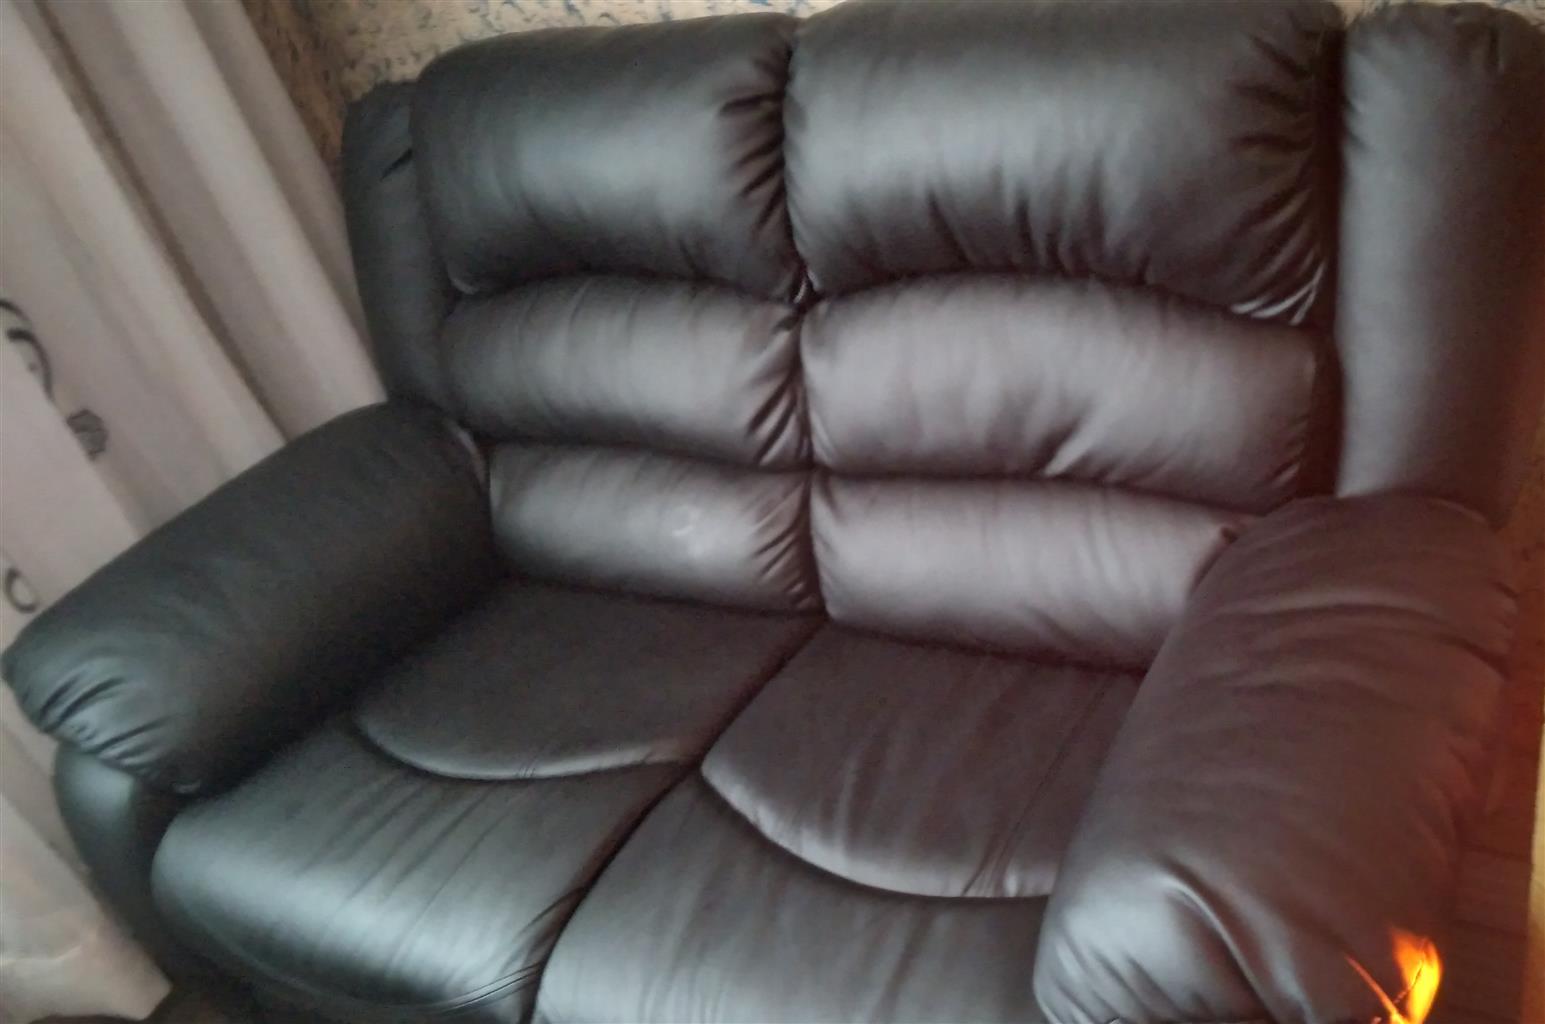 3 piece black leather gomma gomma lounge suite 